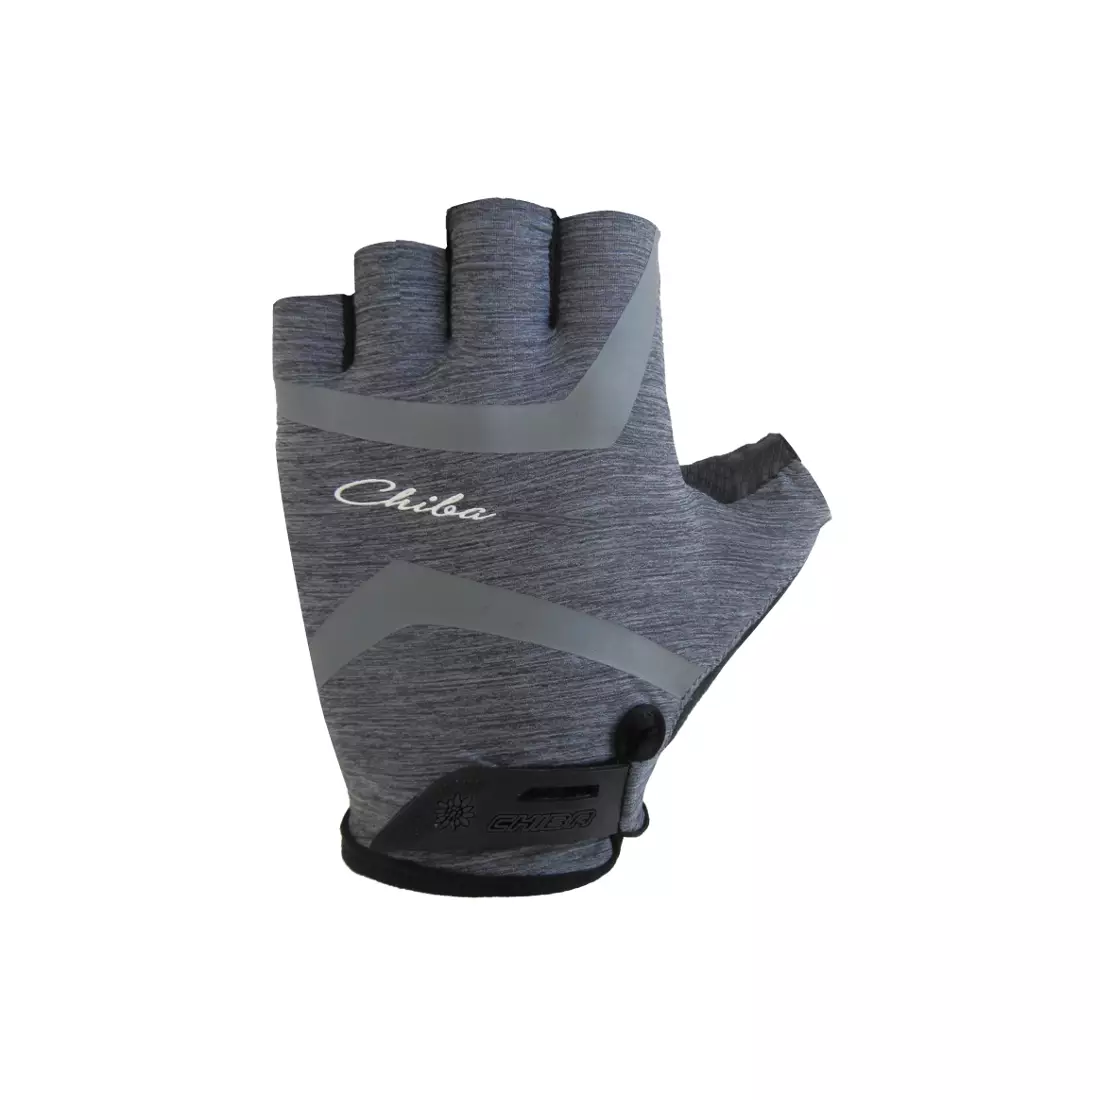 CHIBA LADY SUPER LIGHT women's cycling gloves, gray